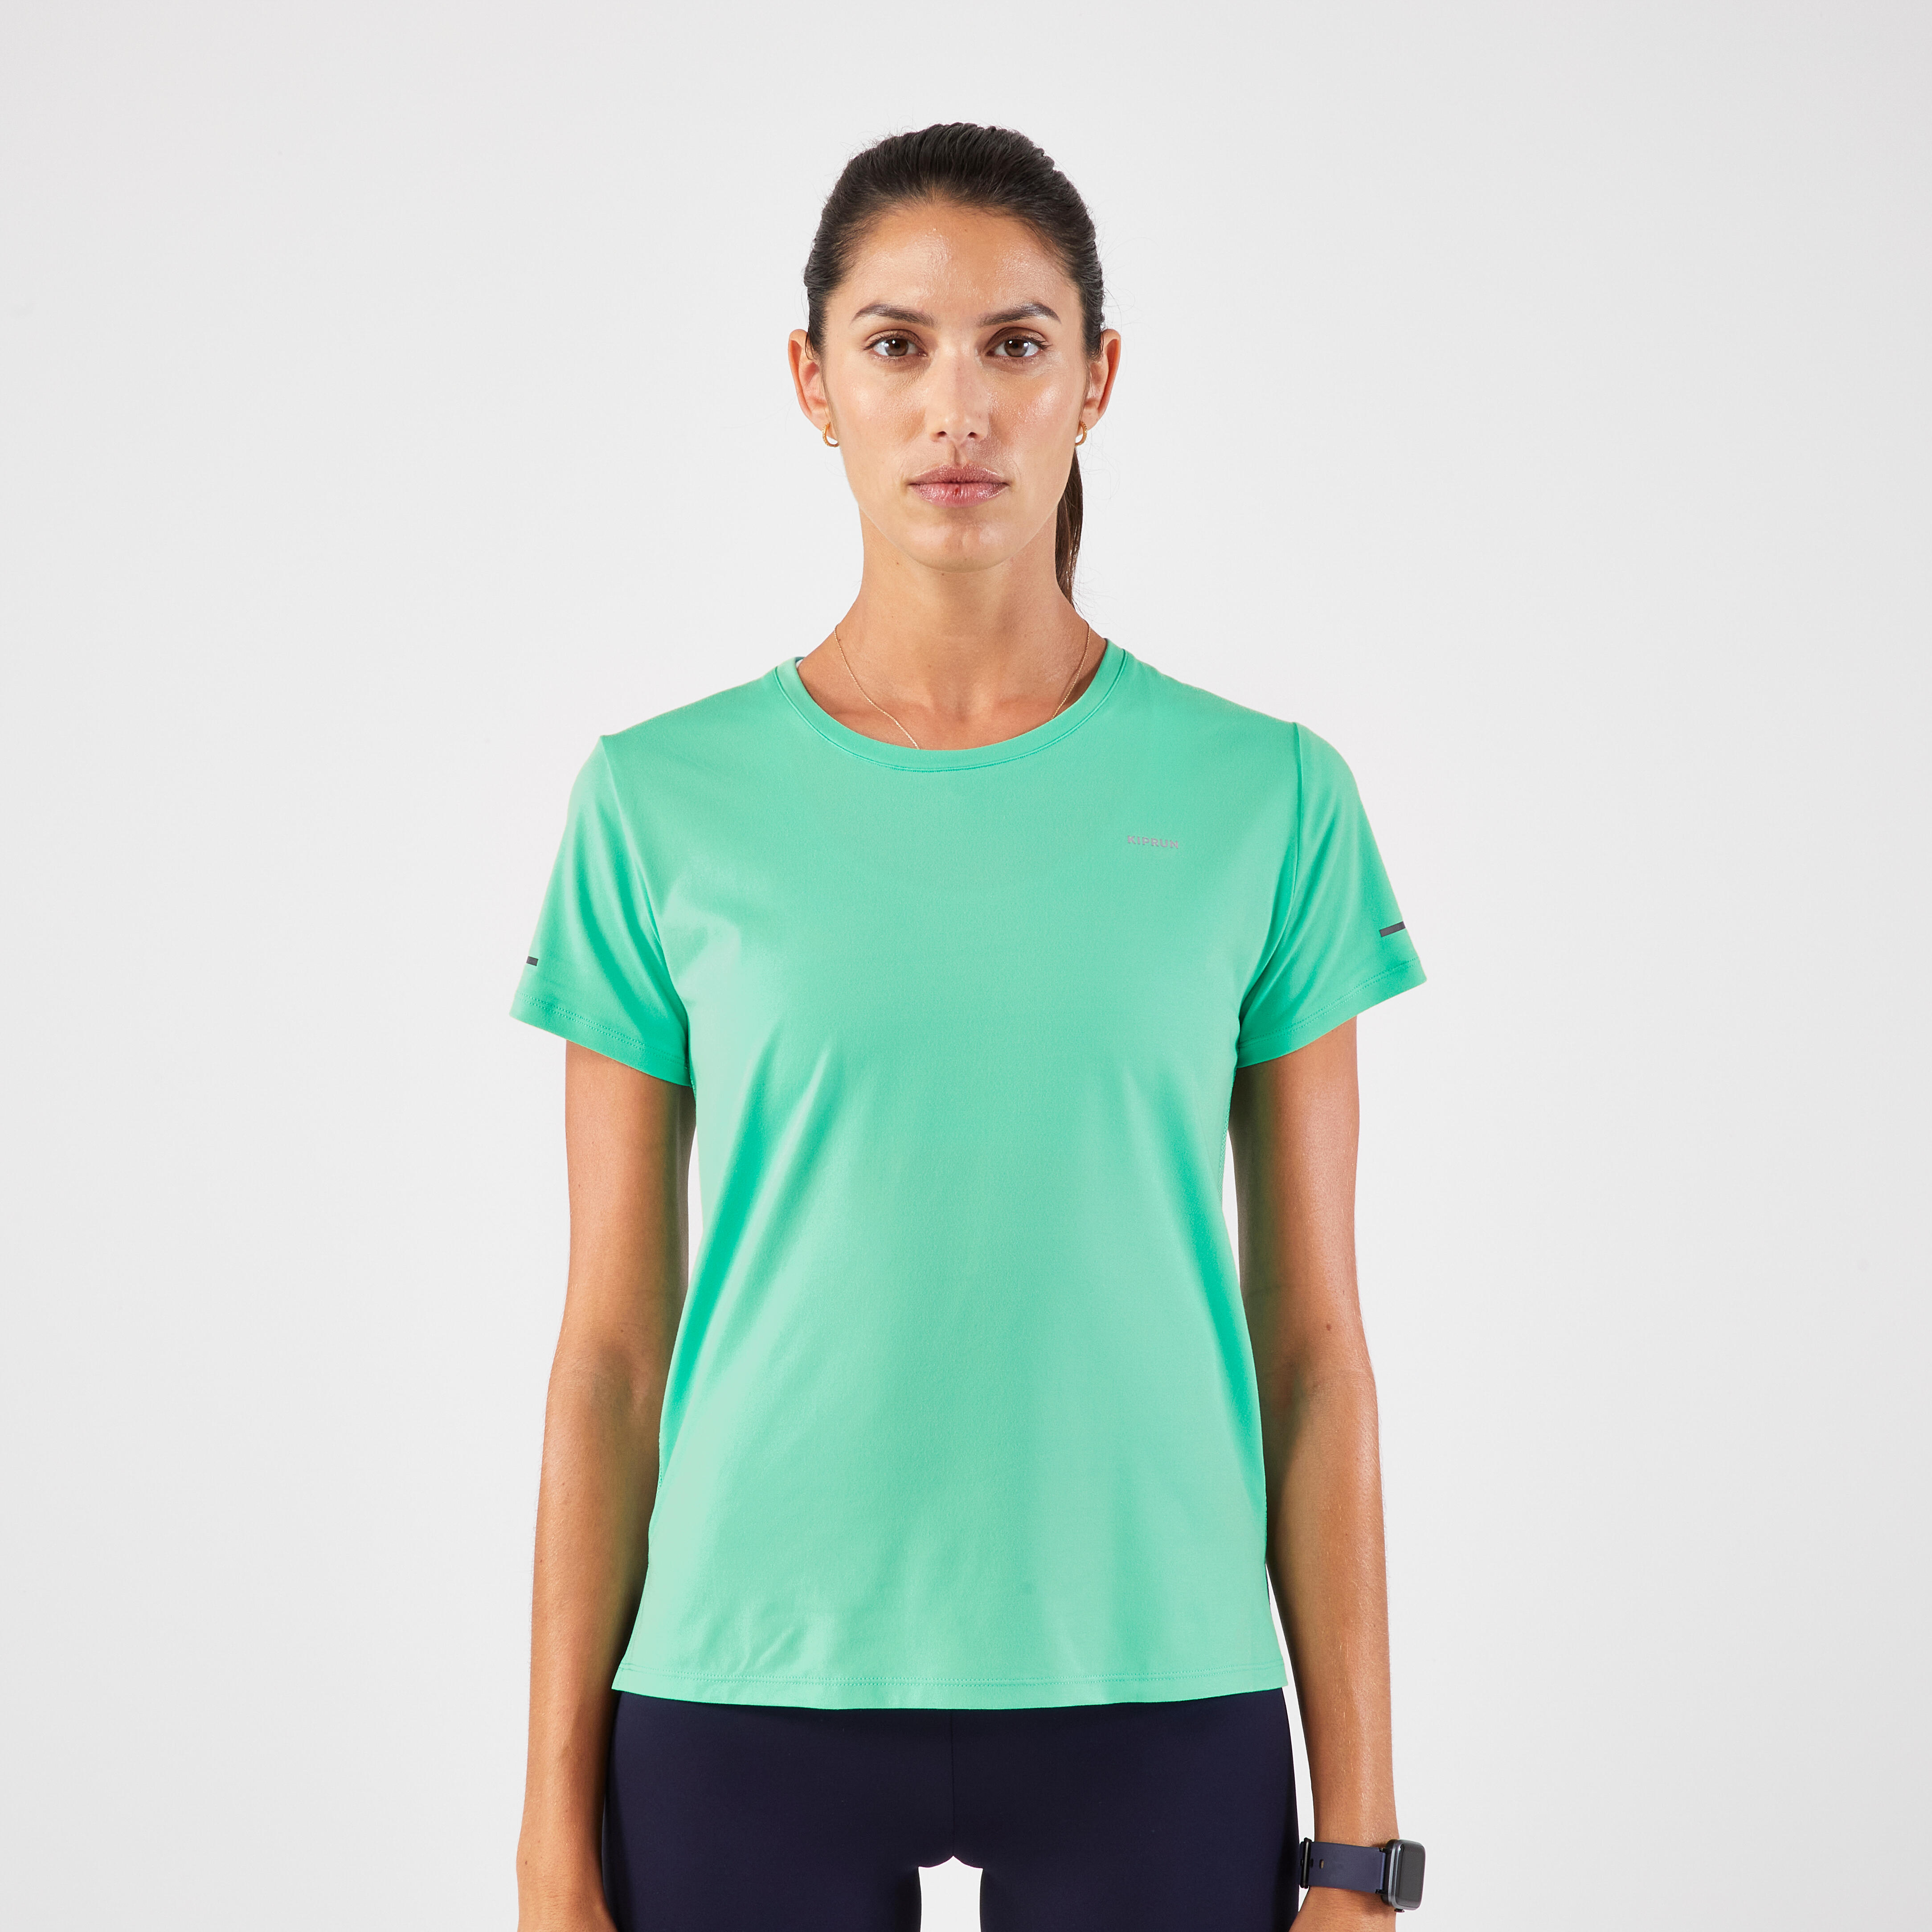 Women's Breathable Running T-shirt